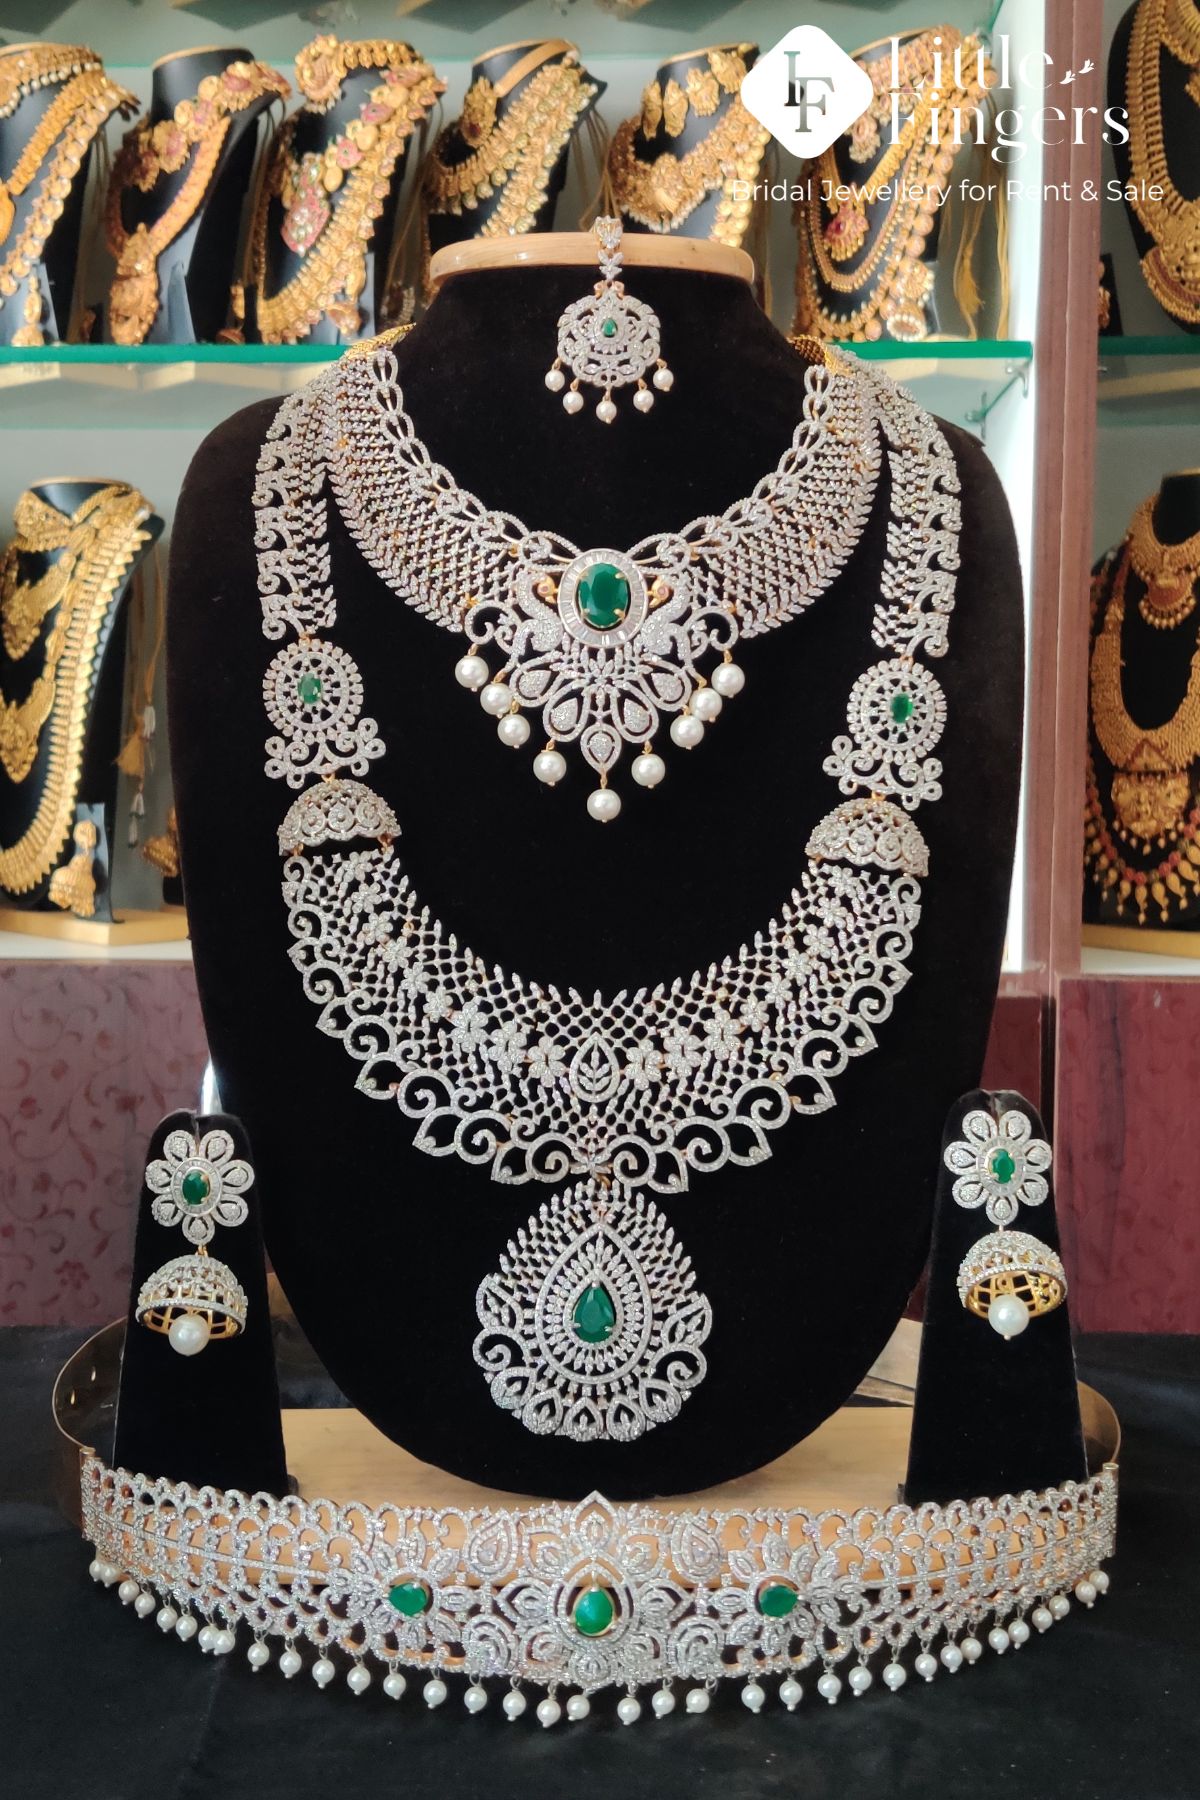 Grand Green American Diamond Jewellery for rent online - Little Fingers ...